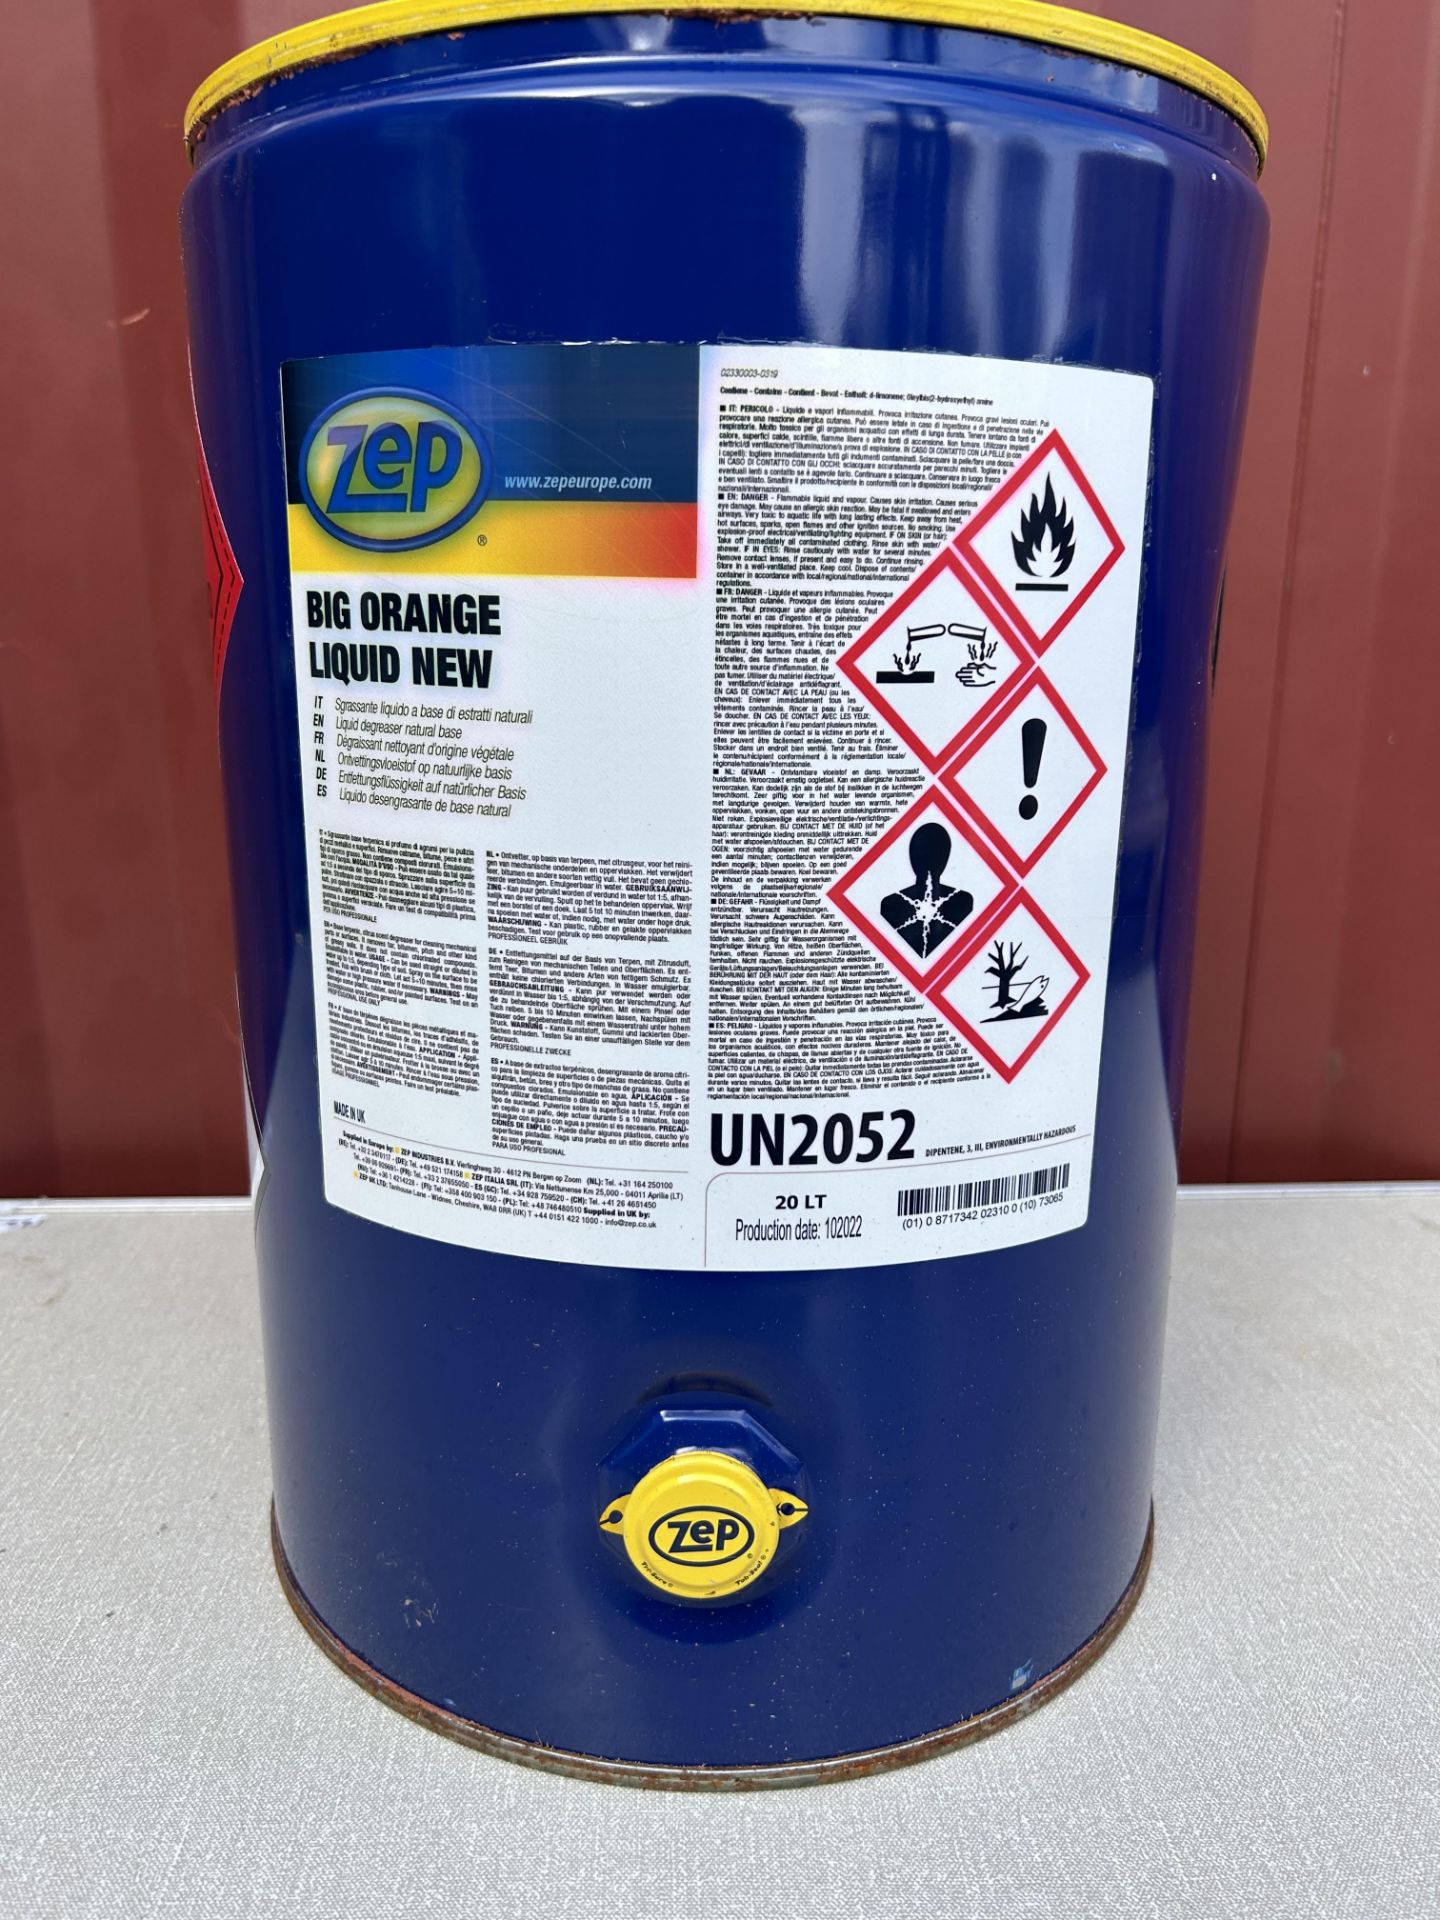 ZEP BIG ORANGE LIQUID 20L - Degreaser Cleaner Deodorizer Natural based liquid solvent SEALED